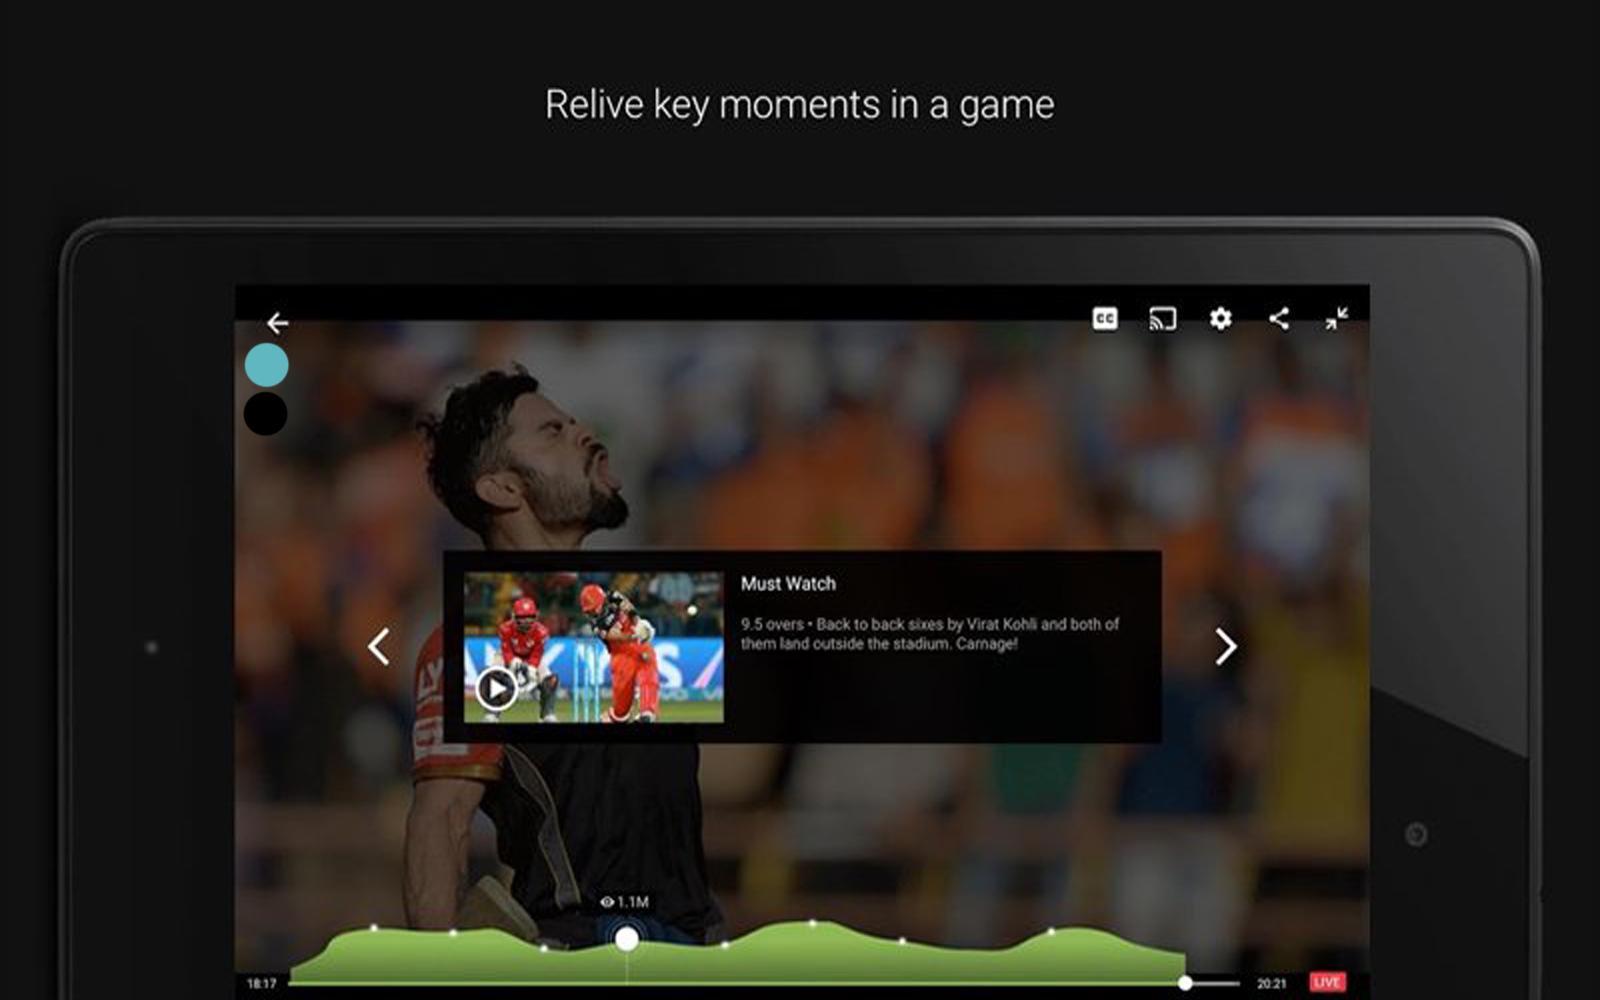 Fantasy Football app. Футбольный менеджер на андроид. Exclusive Video. Chat screenshot.